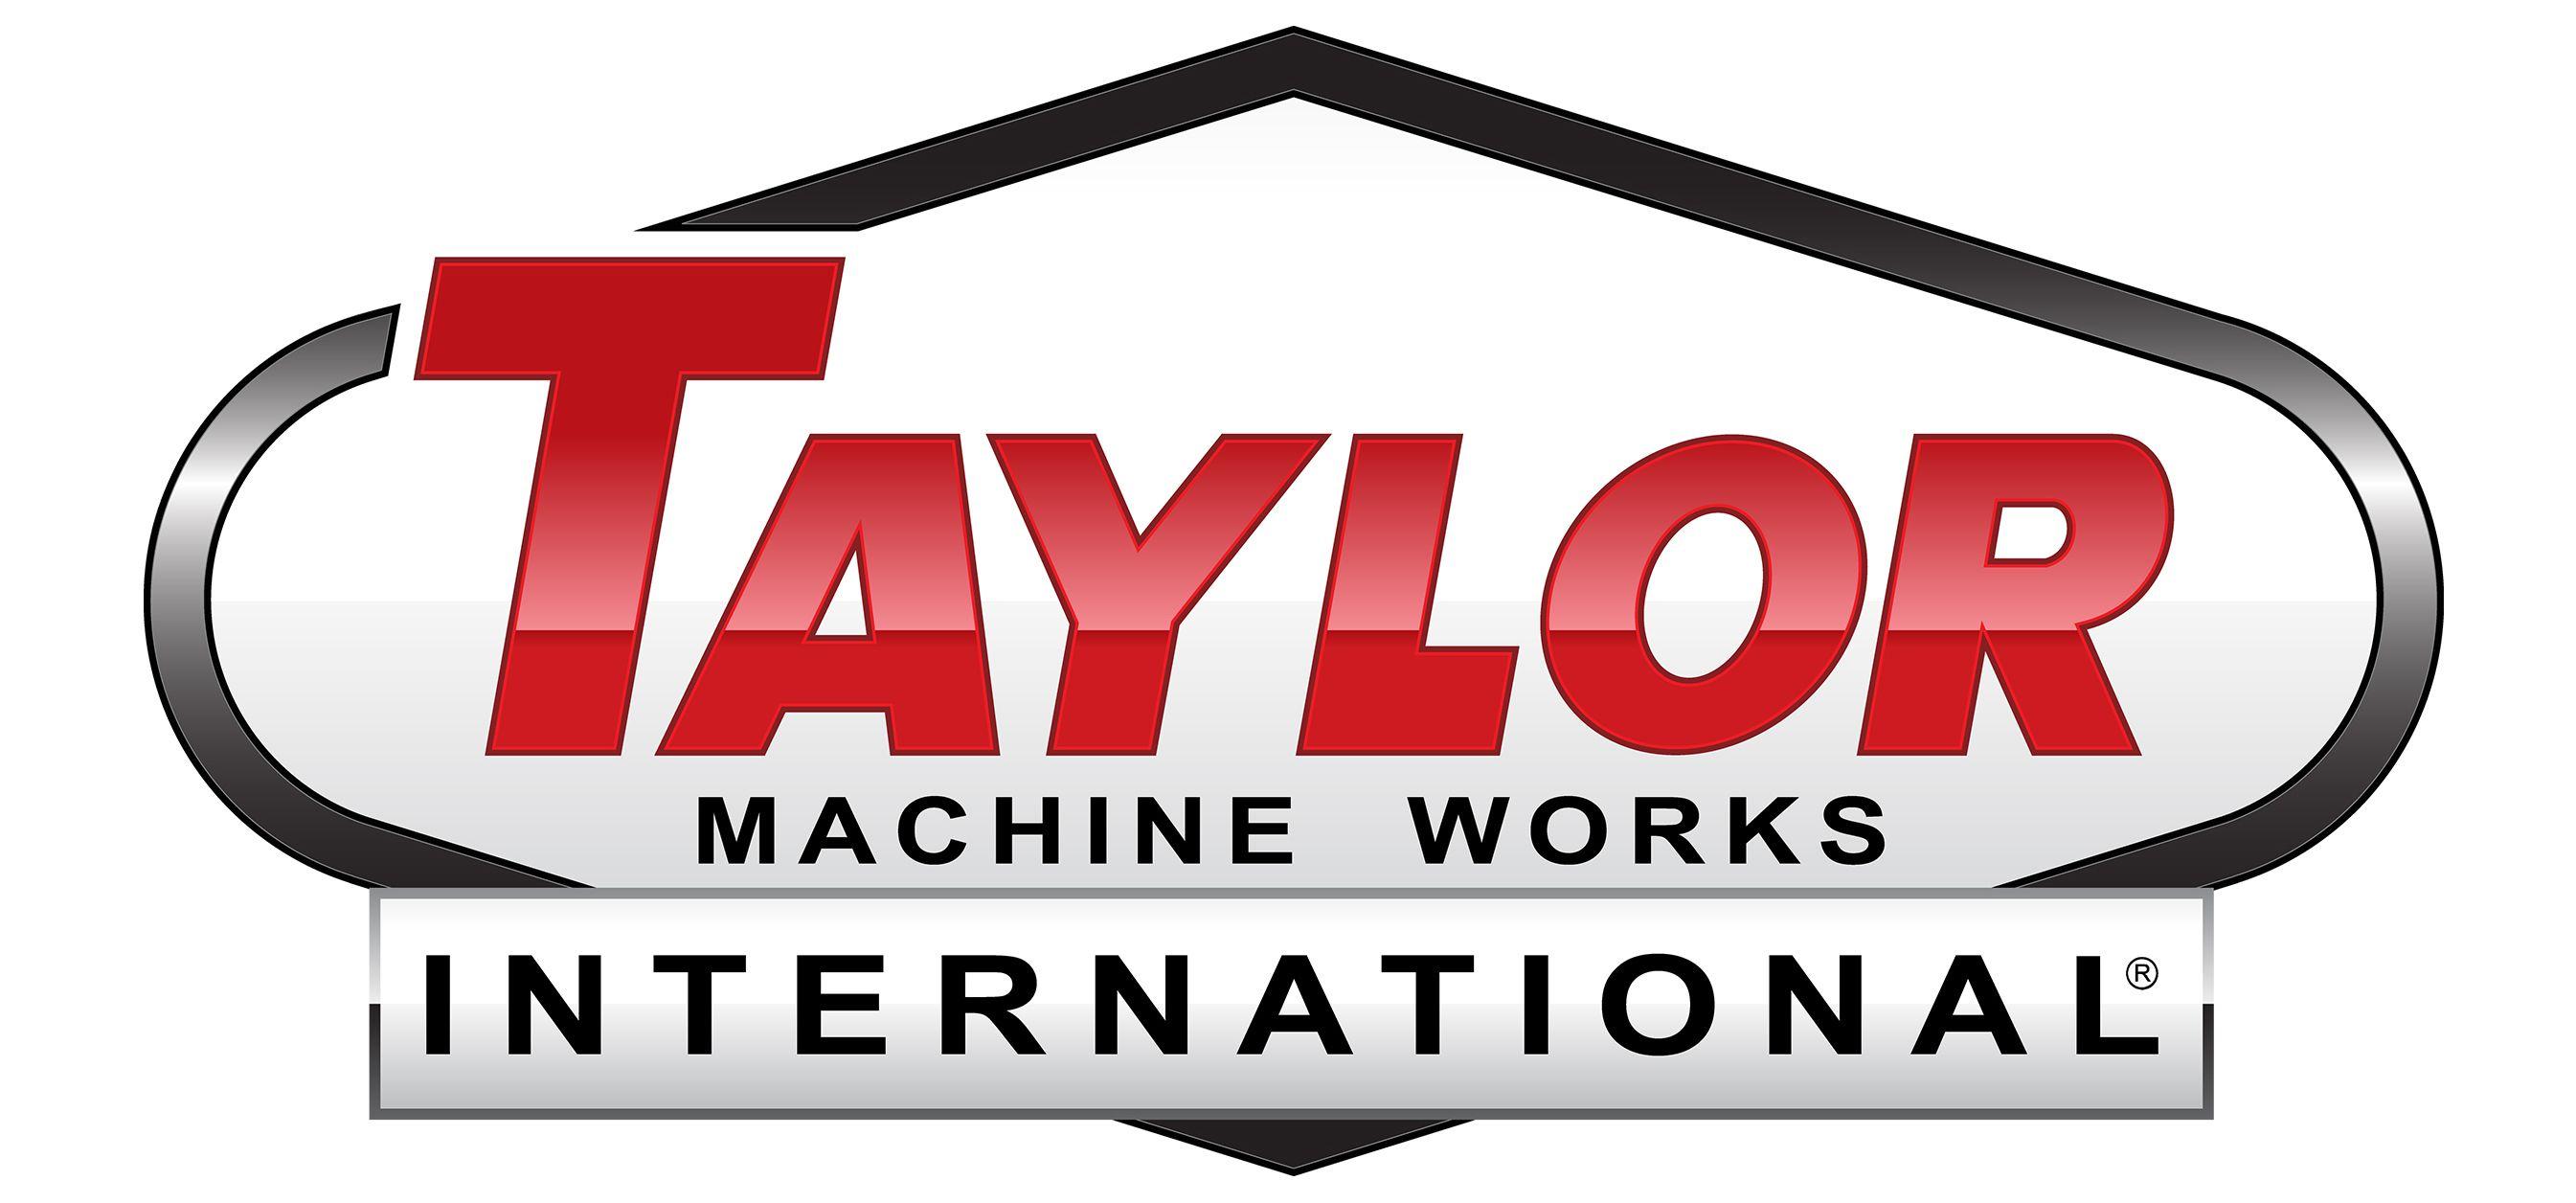 The Taylor Logo - Taylor International Logo. Taylor Machine Works International